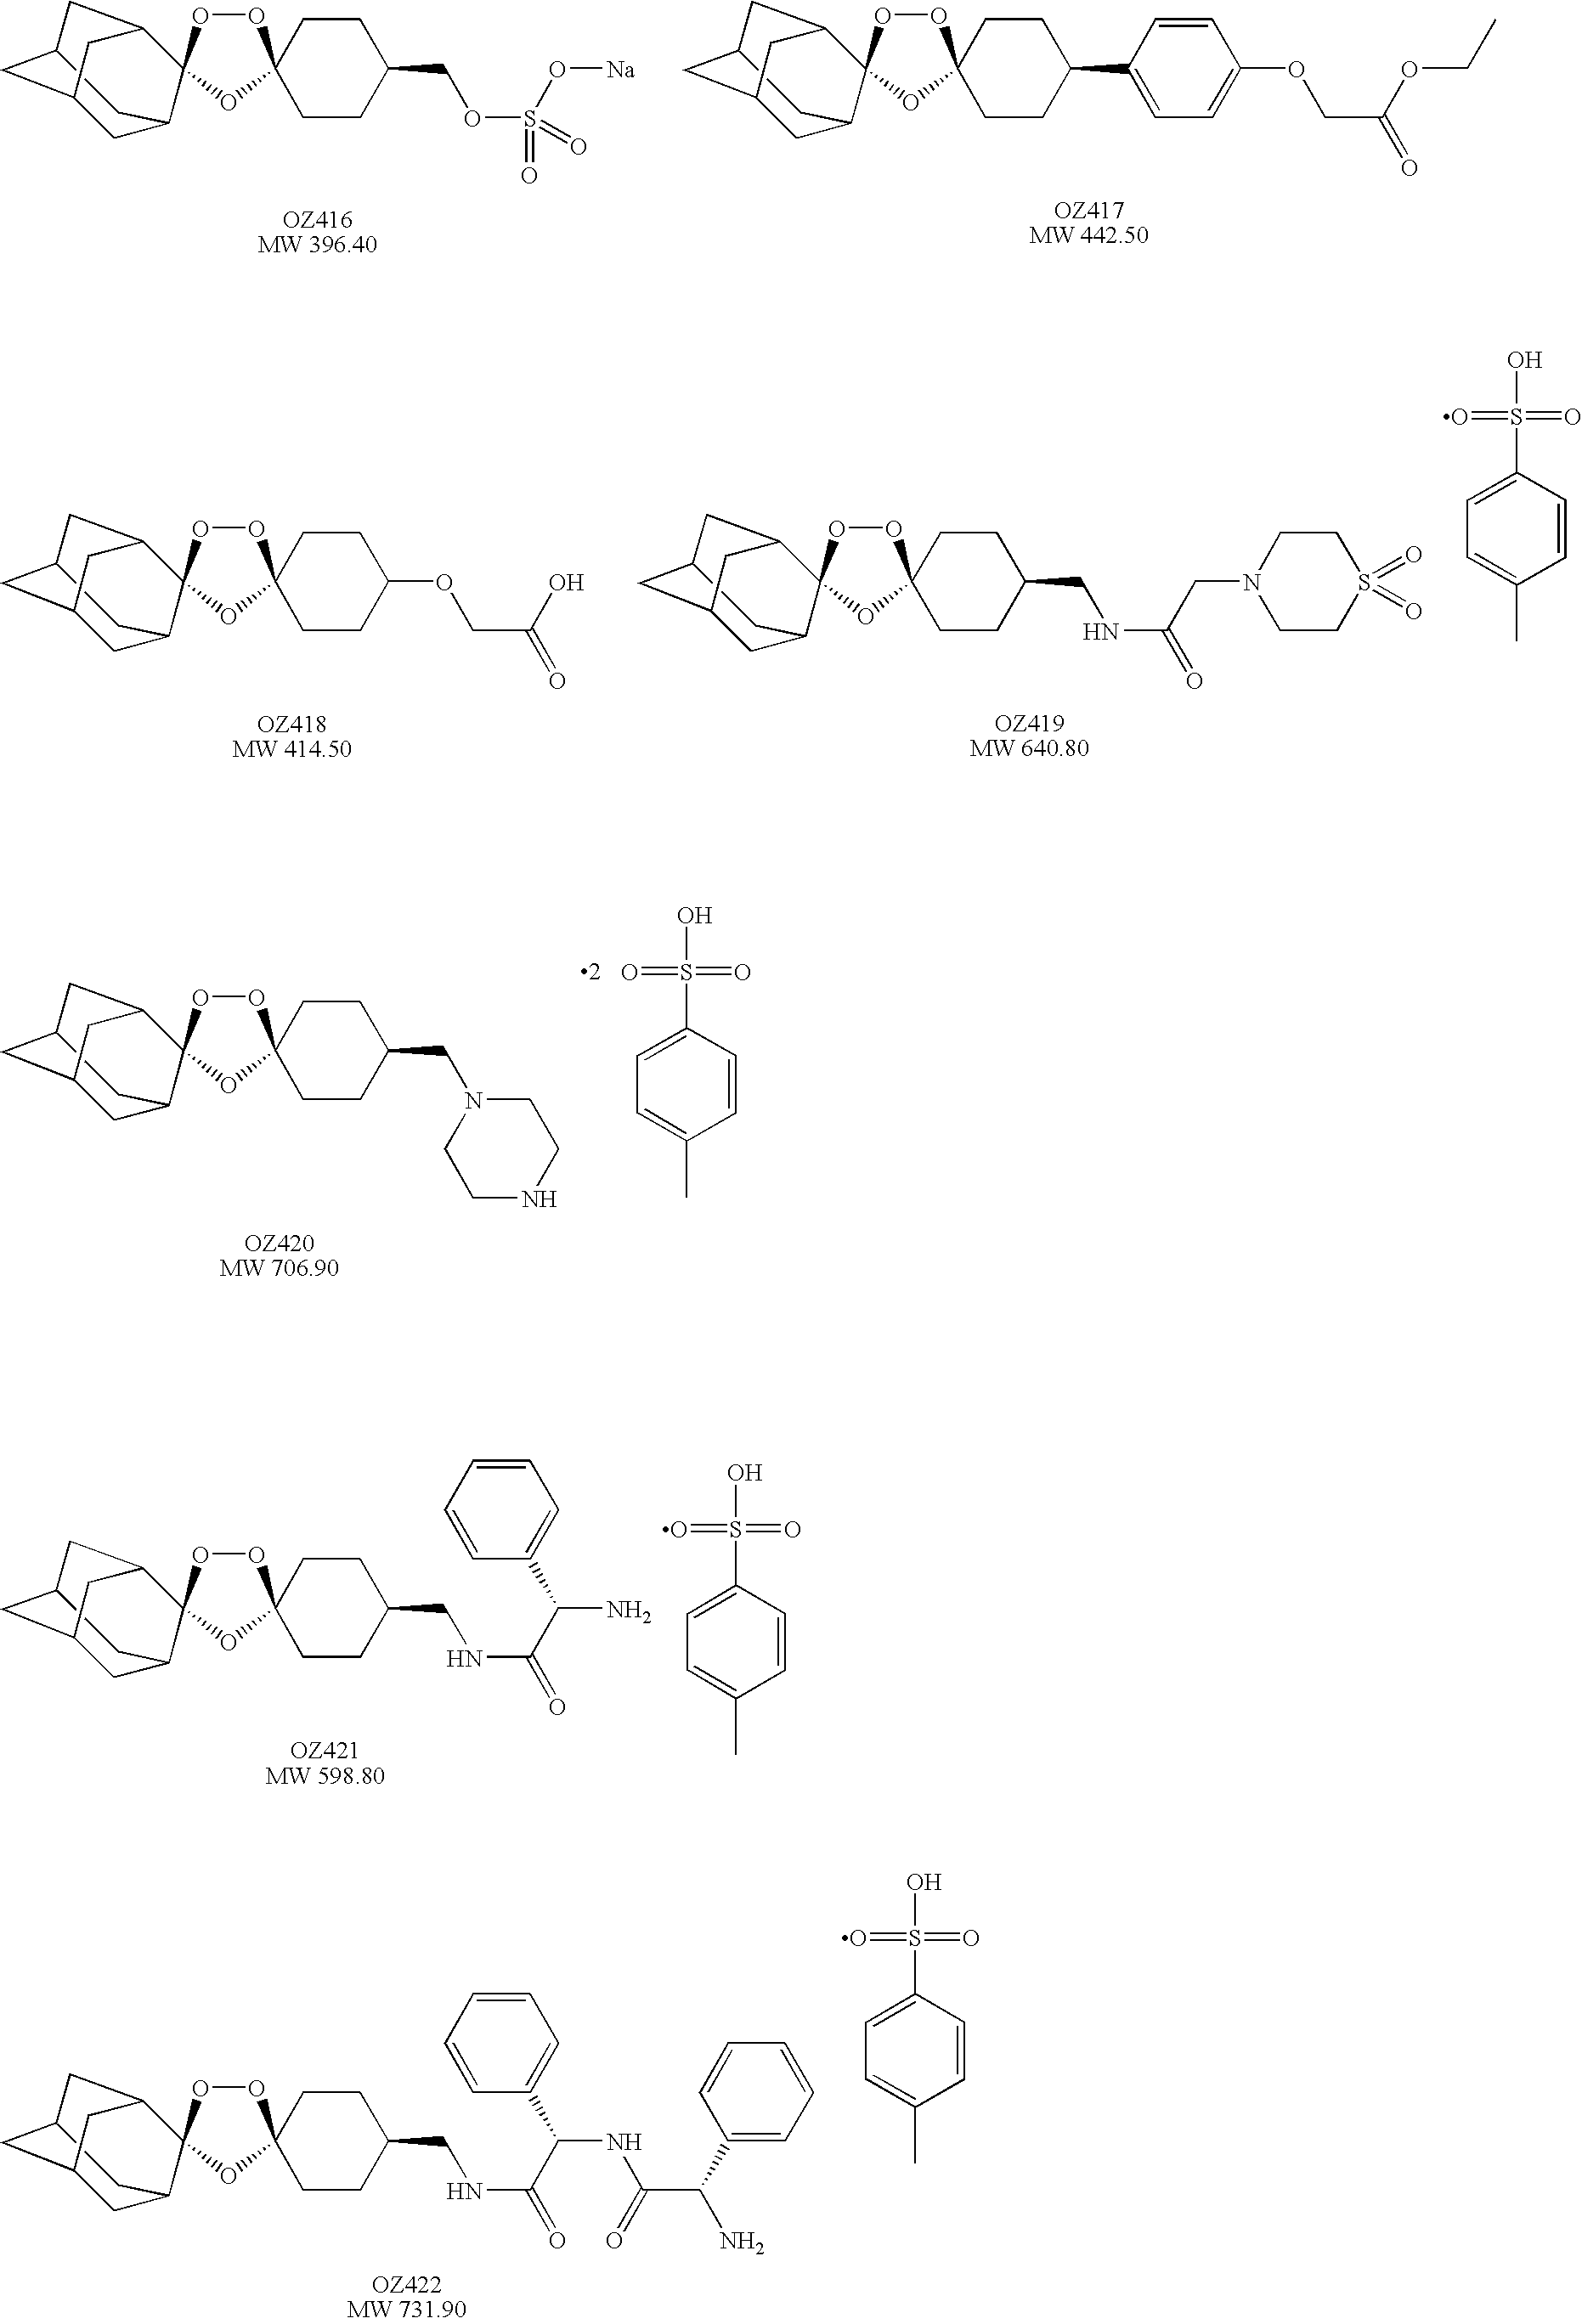 Spiro and dispiro 1,2,4-trioxolane antimalarials